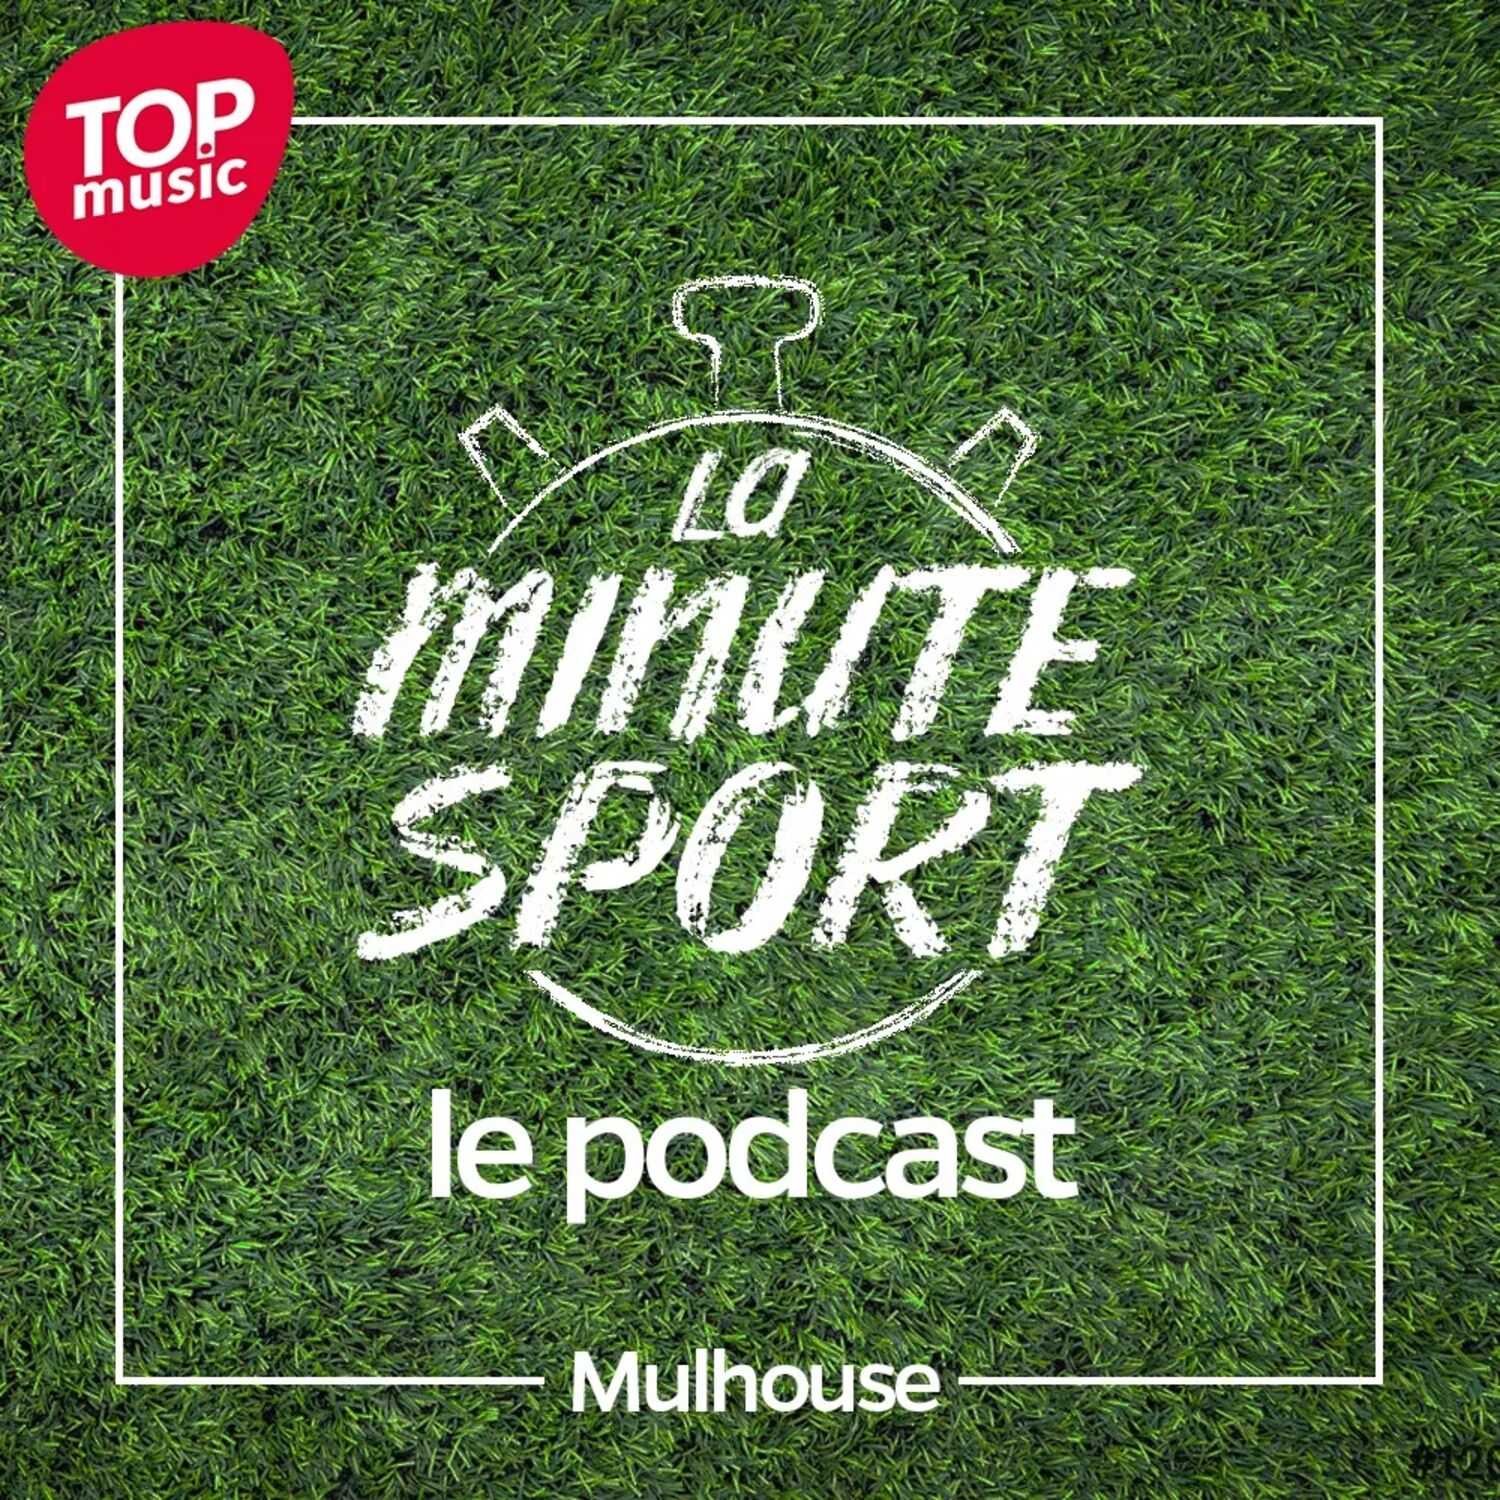 La Minute Sport - Mulhouse - EP39